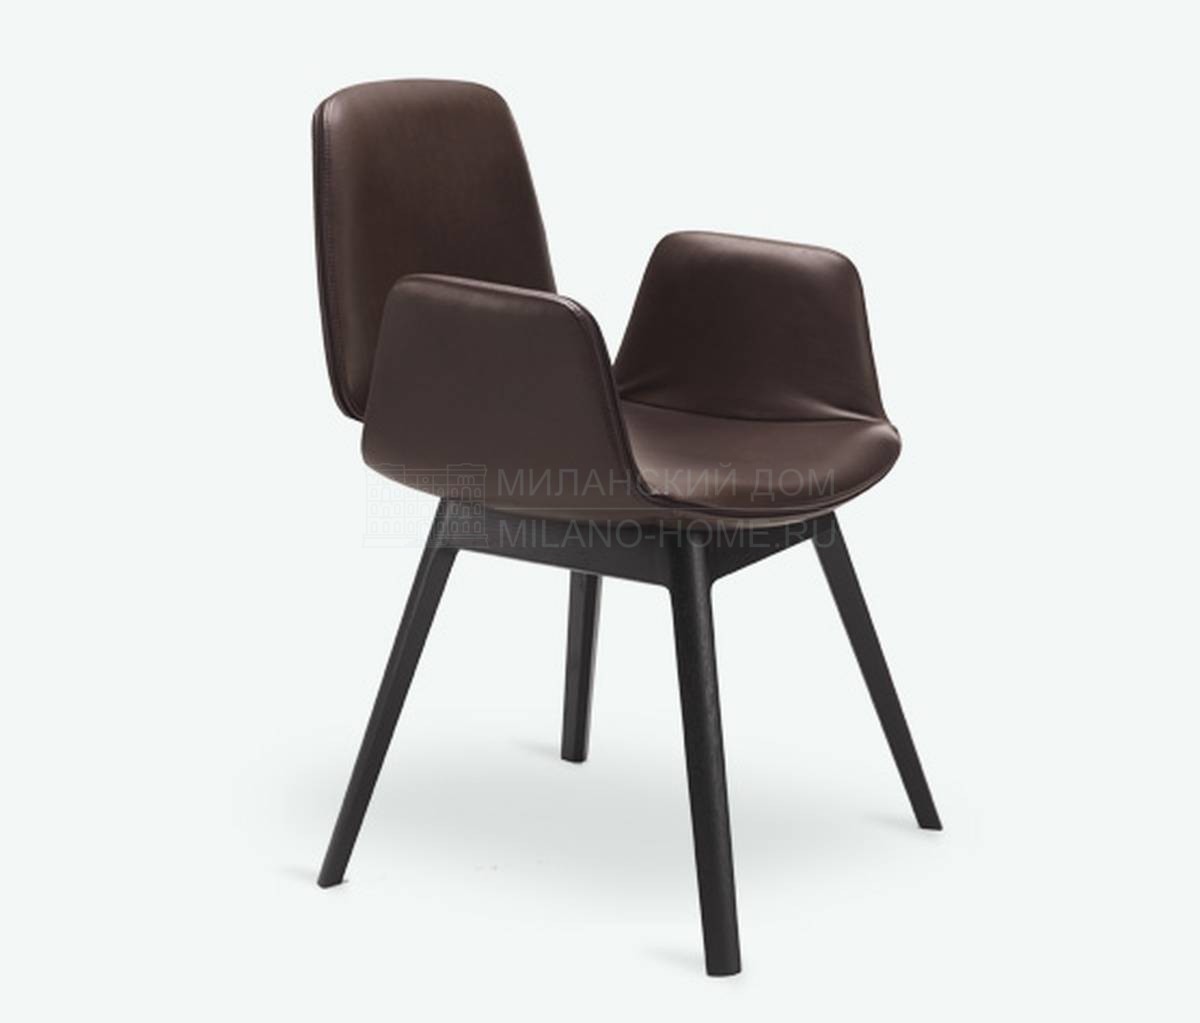 Полукресло Tilda chair brown leather из Германии фабрики FREIFRAU